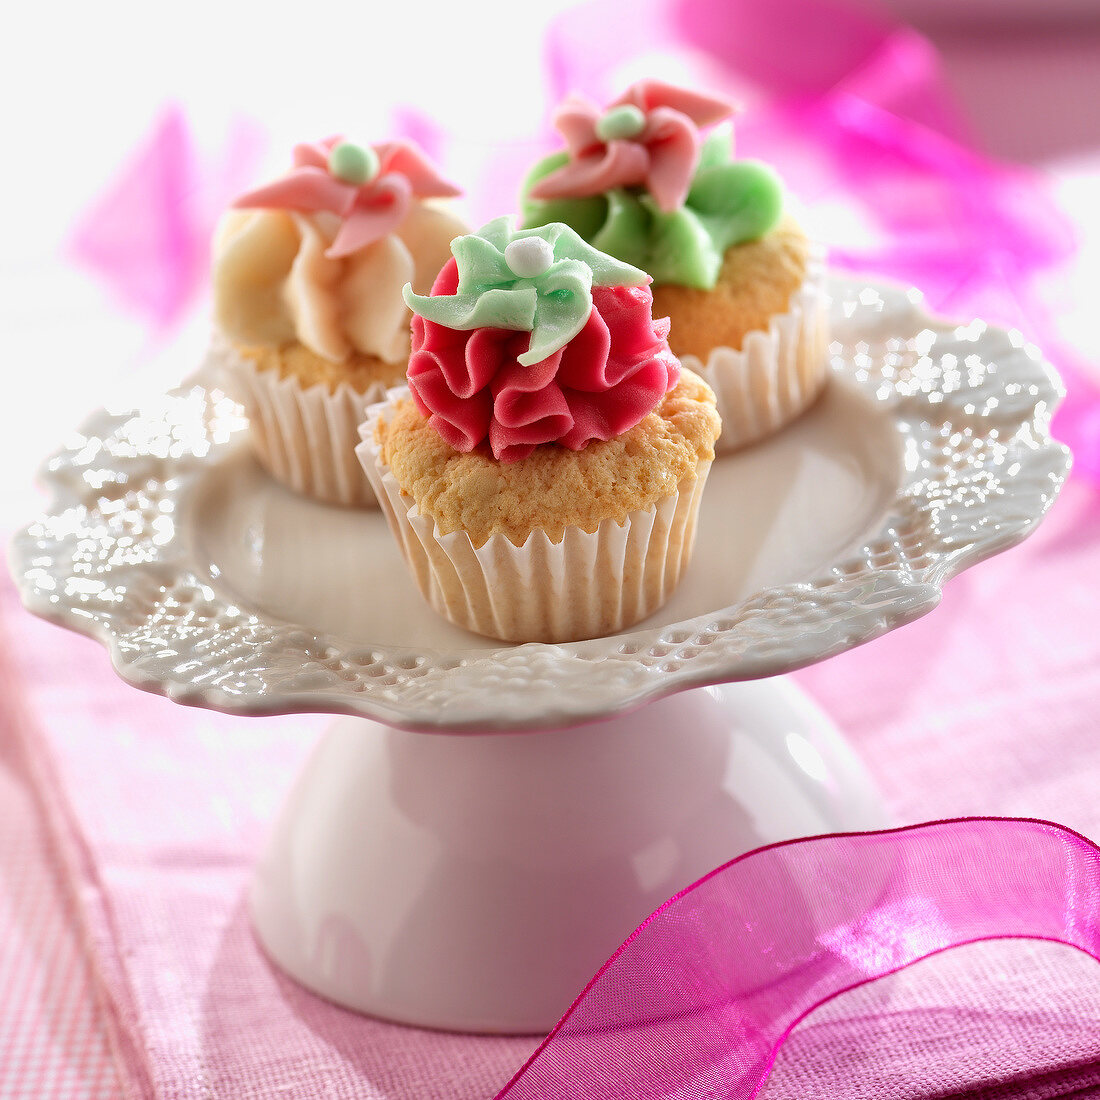 Flowered cupcakes